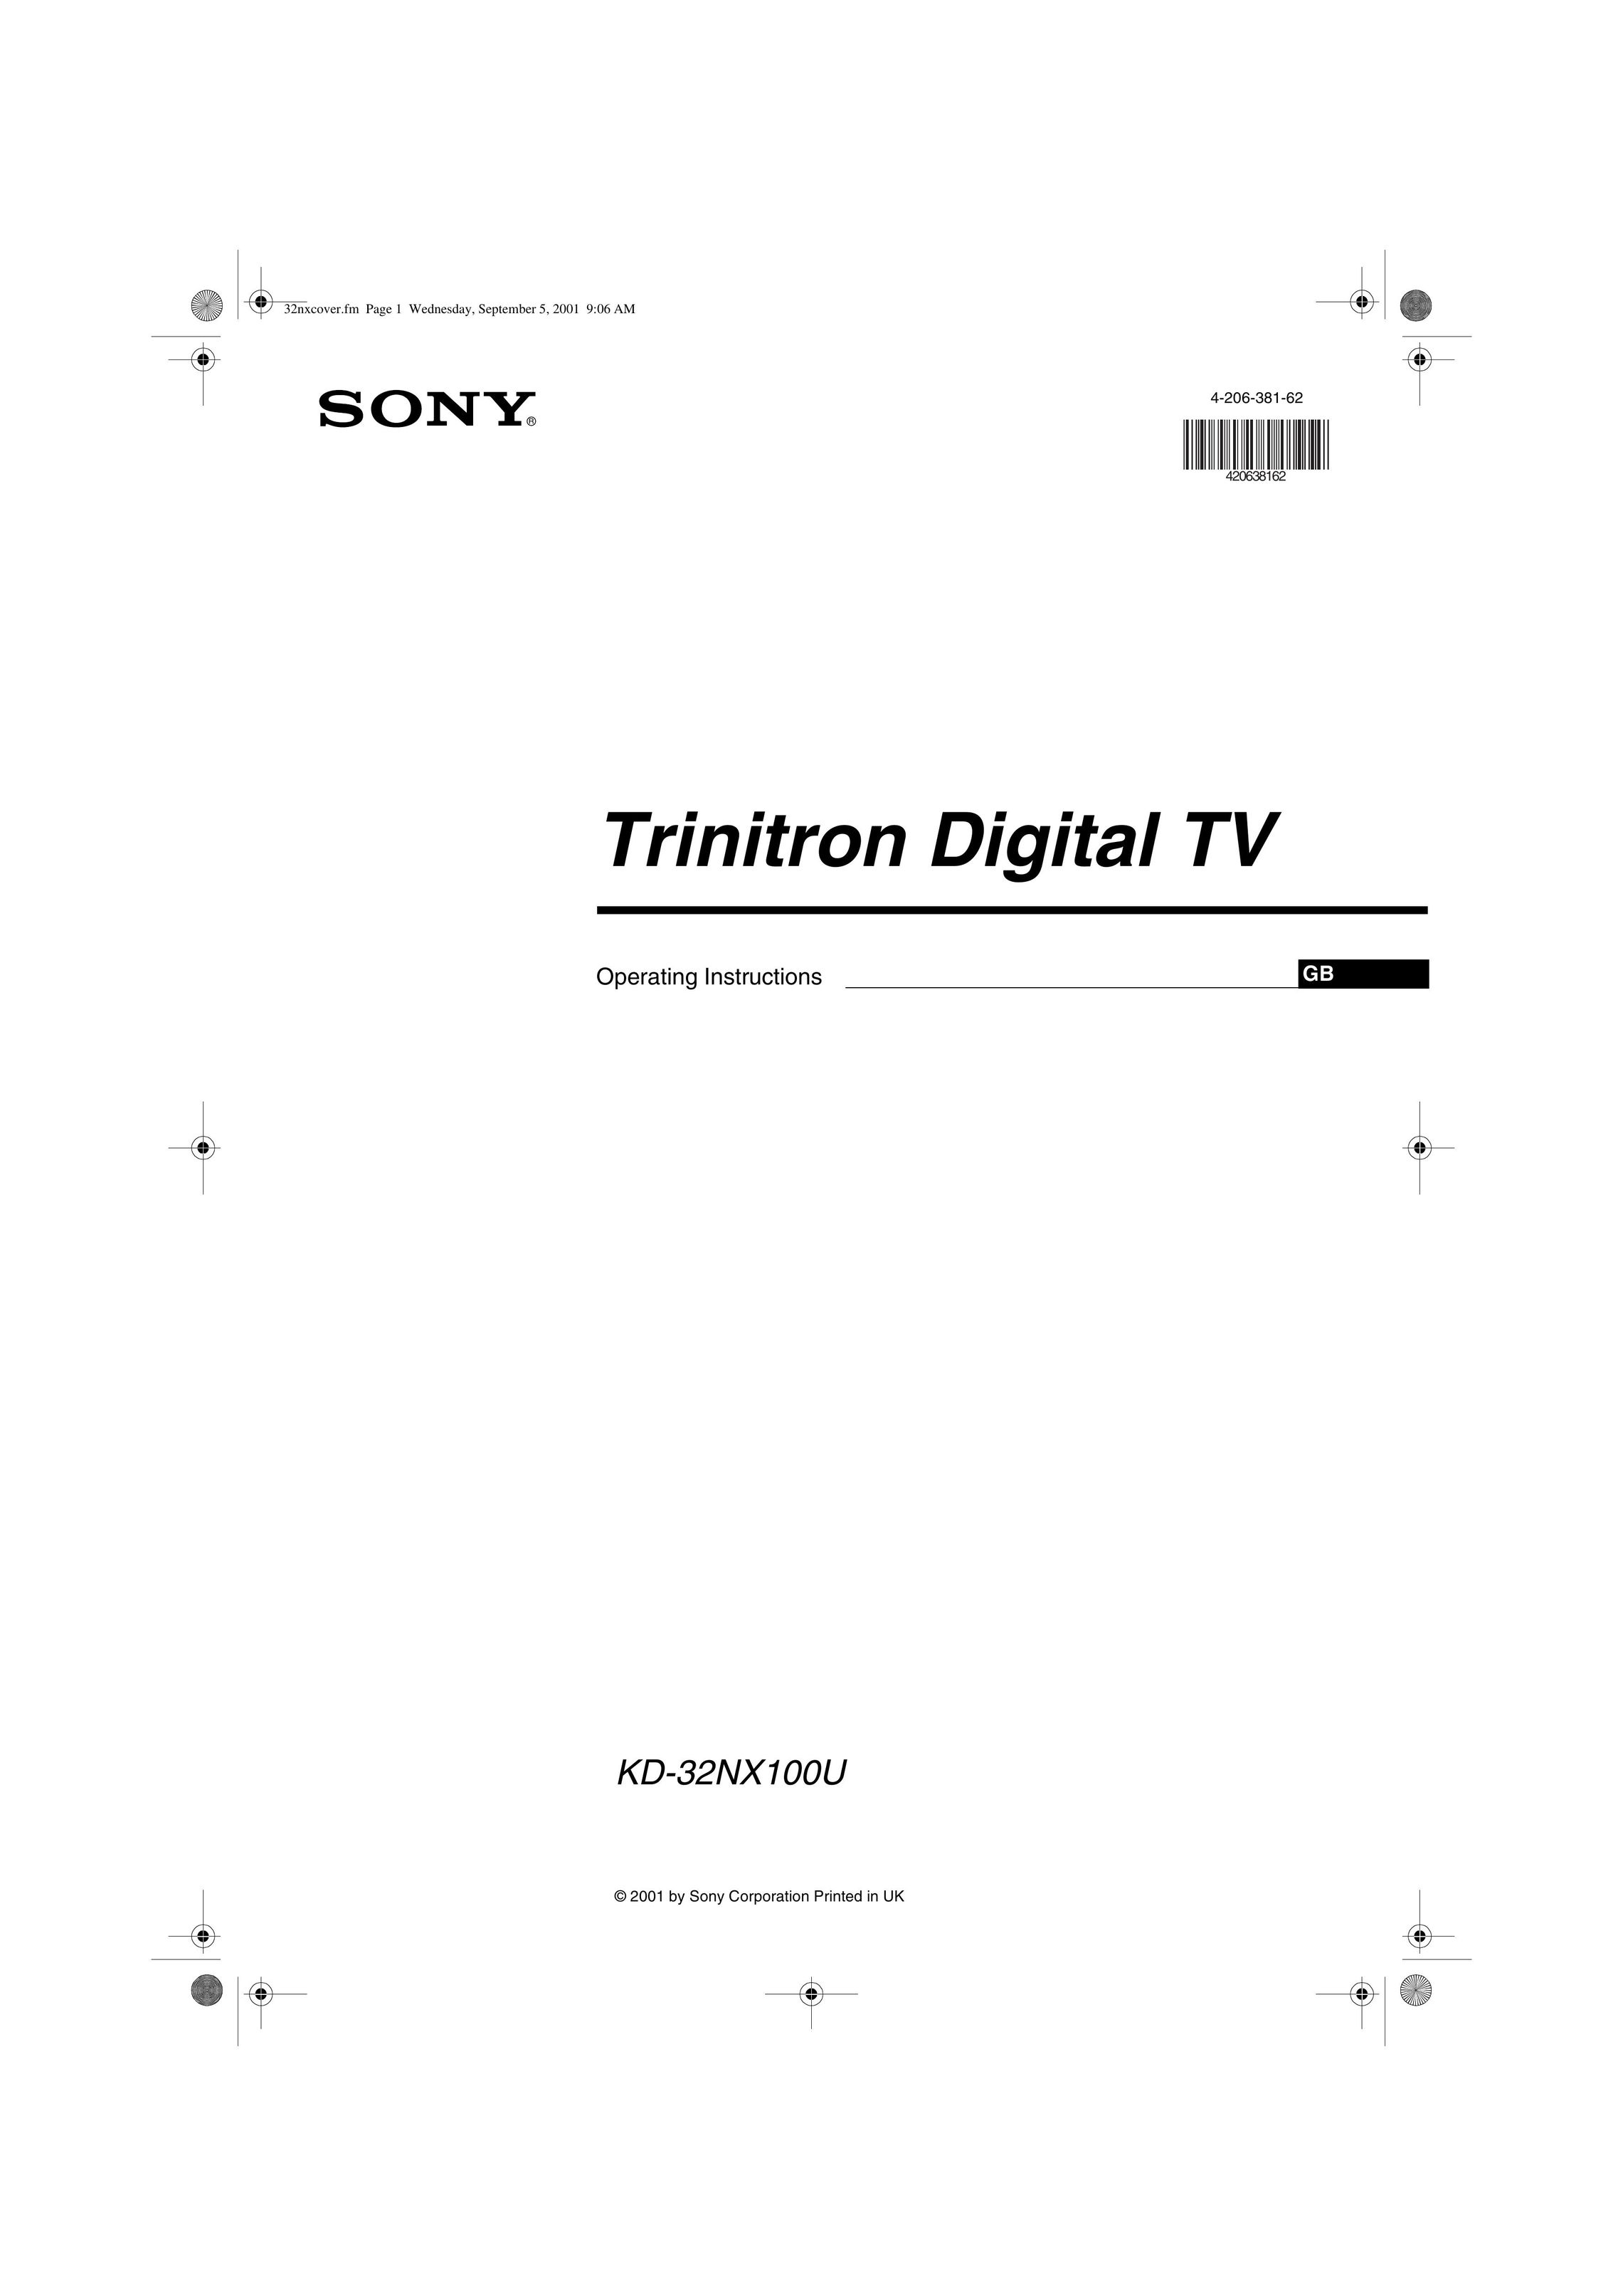 Sony KD-32NX100U CRT Television User Manual